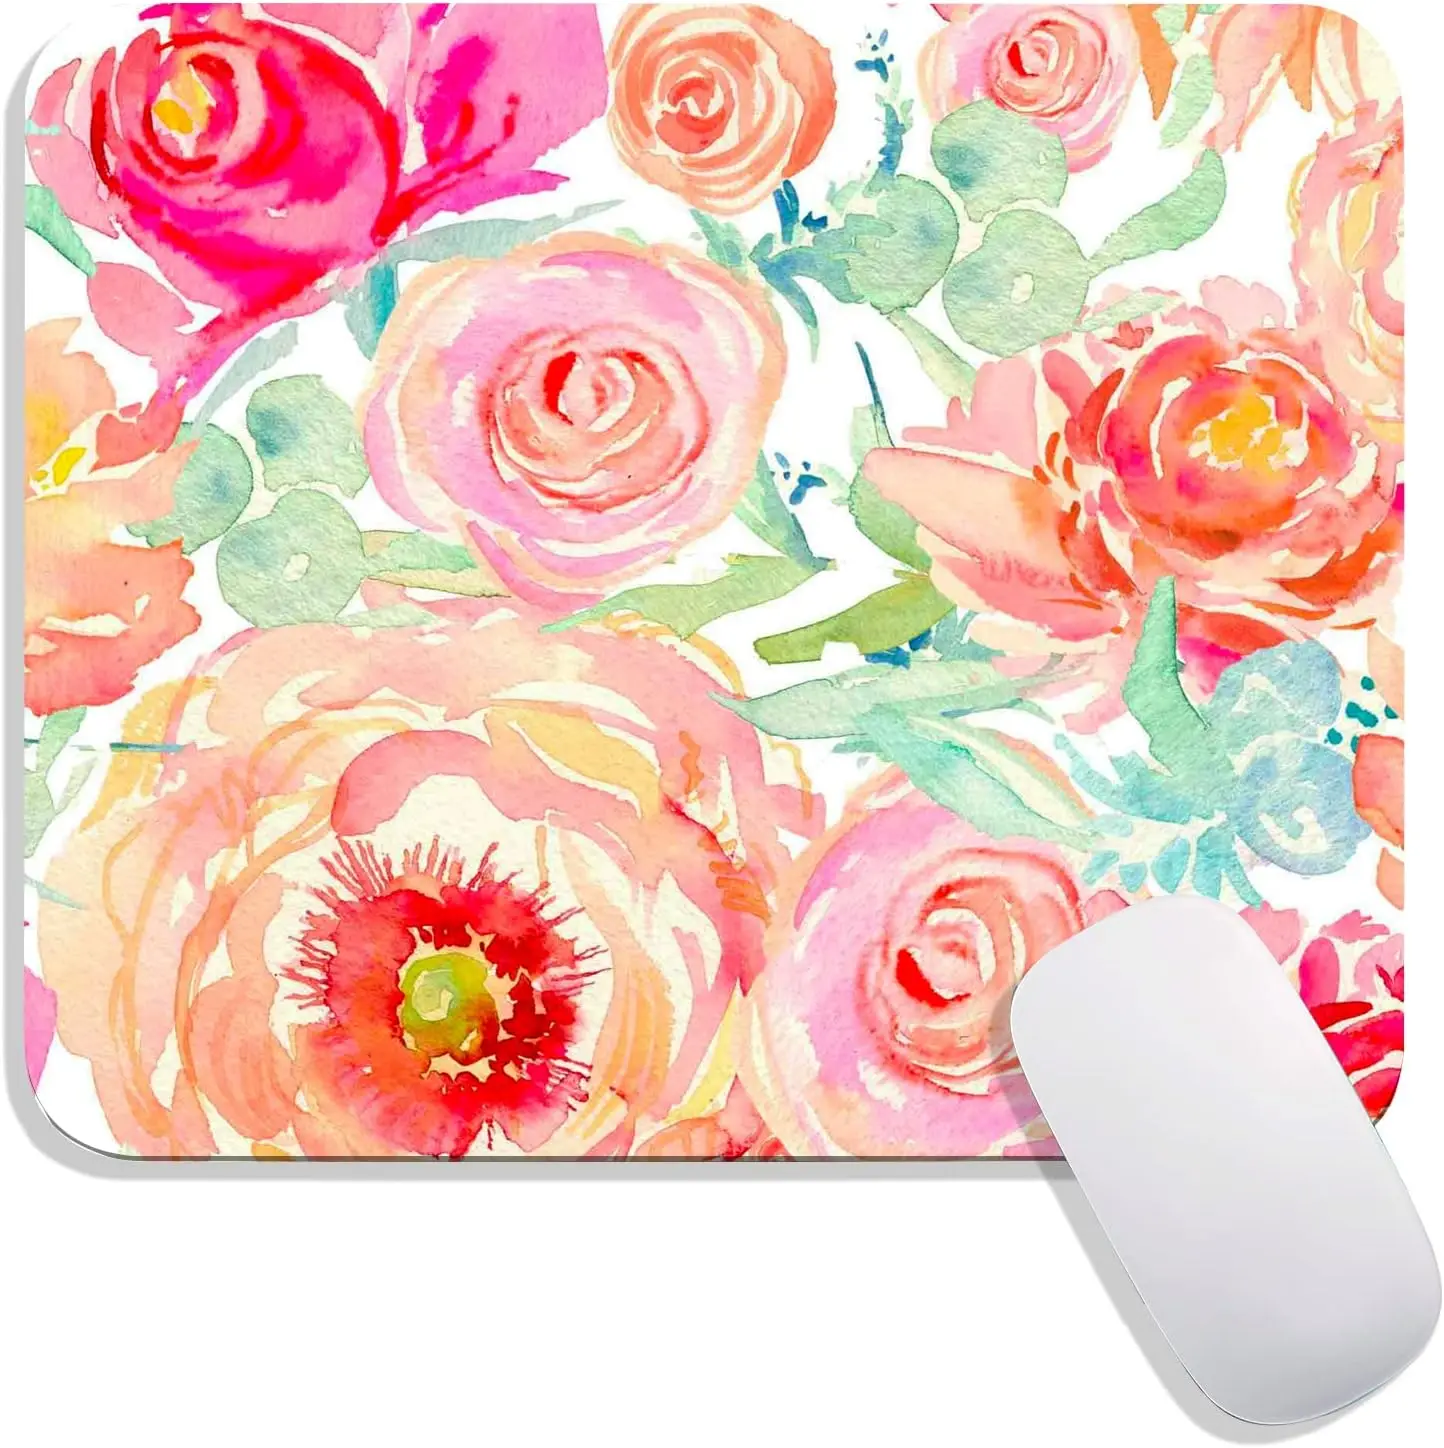 

Rose Floral Flower Mouse Pad Watercolor Premium-Textured Mousepads Design Mousepad Non-Slip Rubber Base Computer Mouse Pads